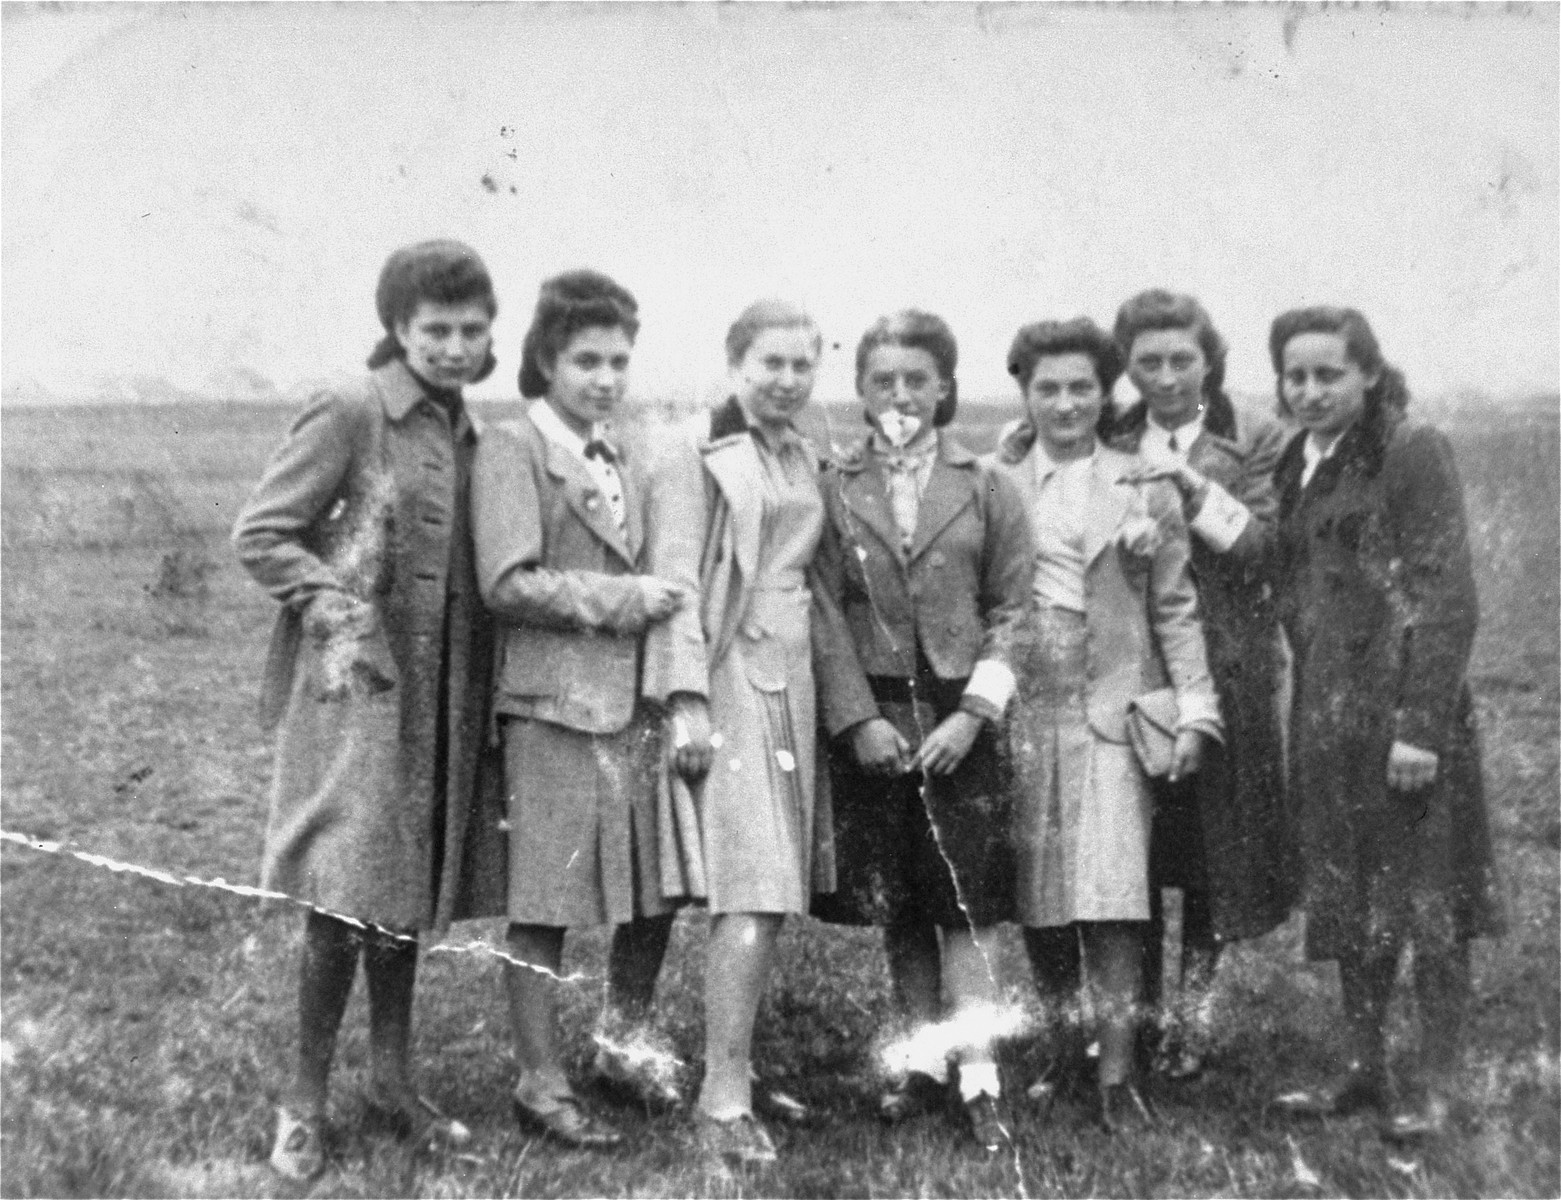 A group of young Jewish women pose in a field in the Chrzanow ghetto. 

Pictured from left to right are: Bronka Wachsberg, Esta Kleiman, Gita Eisenberg, Sabina, Hela Koniecpolska, Hanka Eisenberg and Esta Bochner.